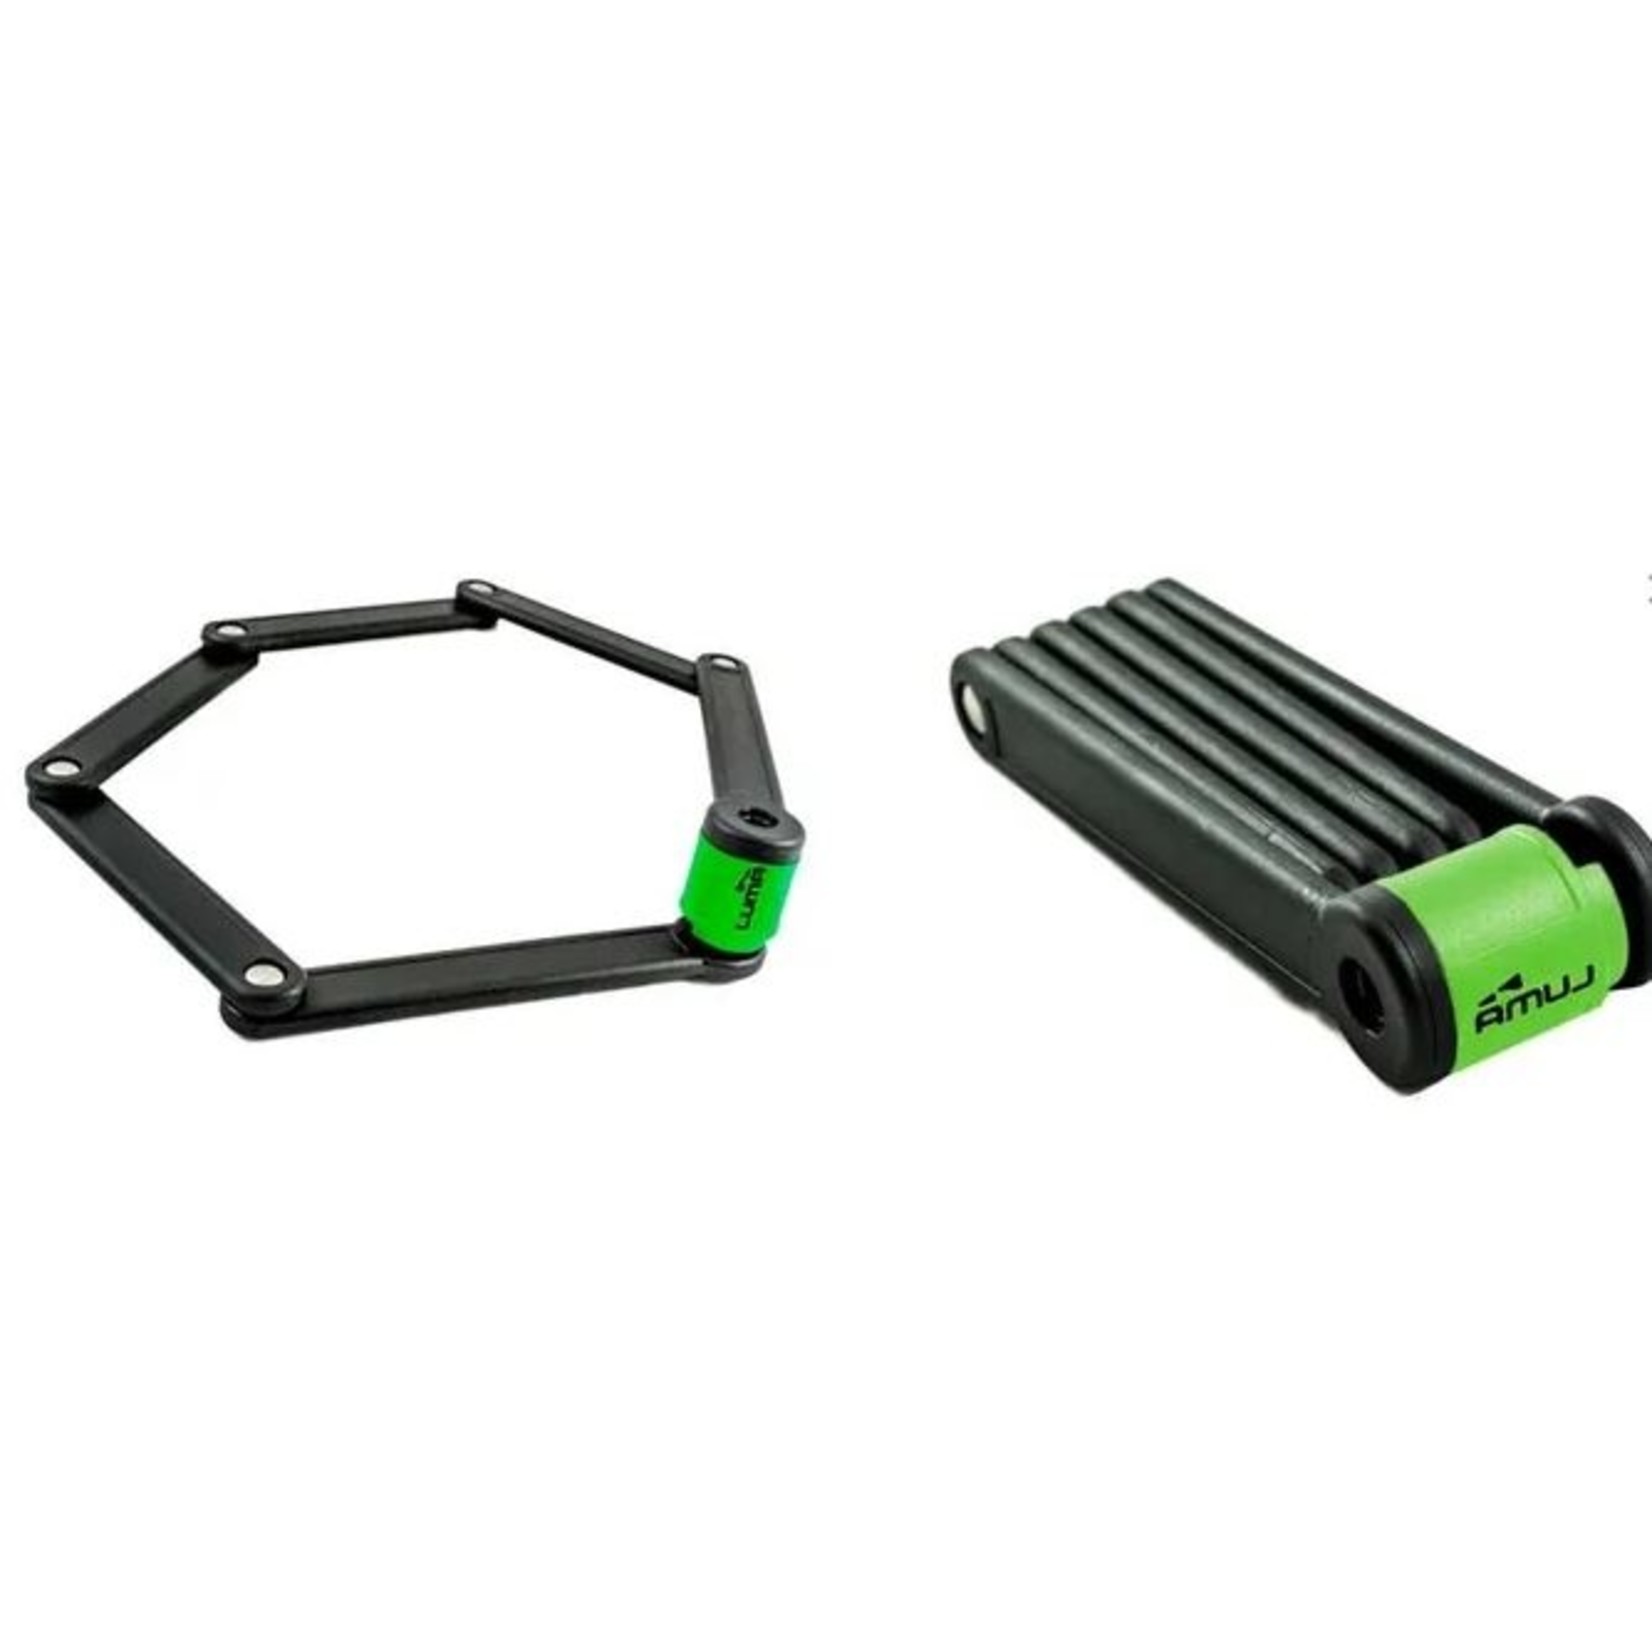 Luma Luma Bike/Cycling Lock - High Security Key Folding Lock 80cm With Green